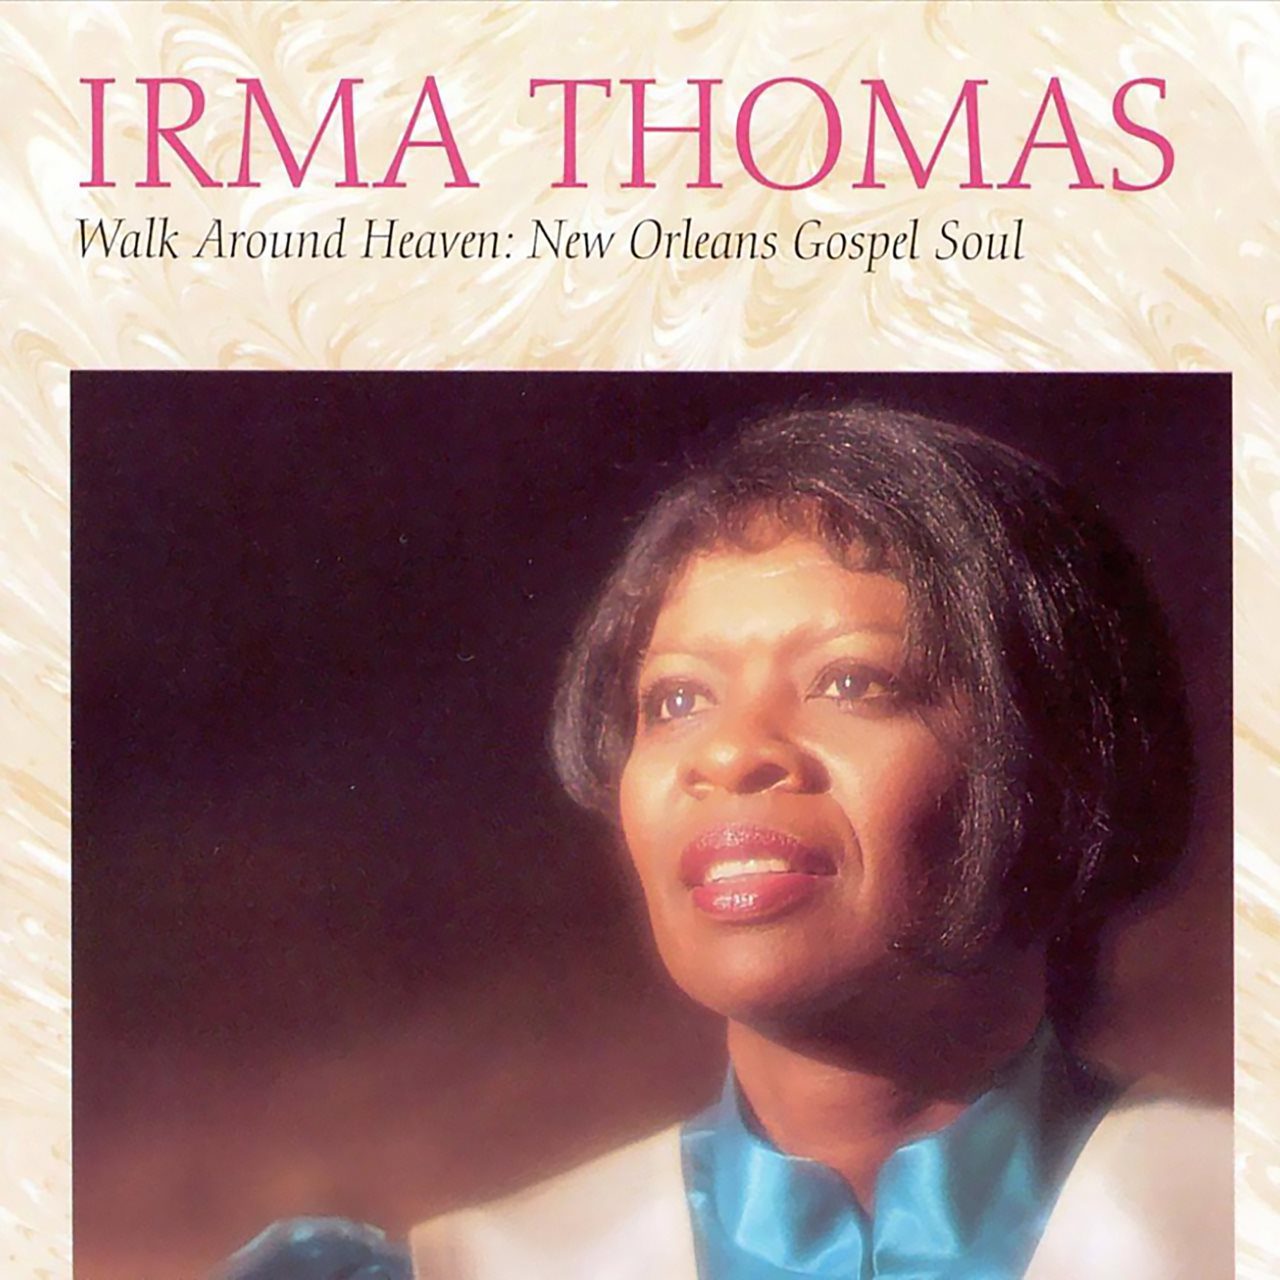 Irma Thomas – Walk Around Heaven cover album